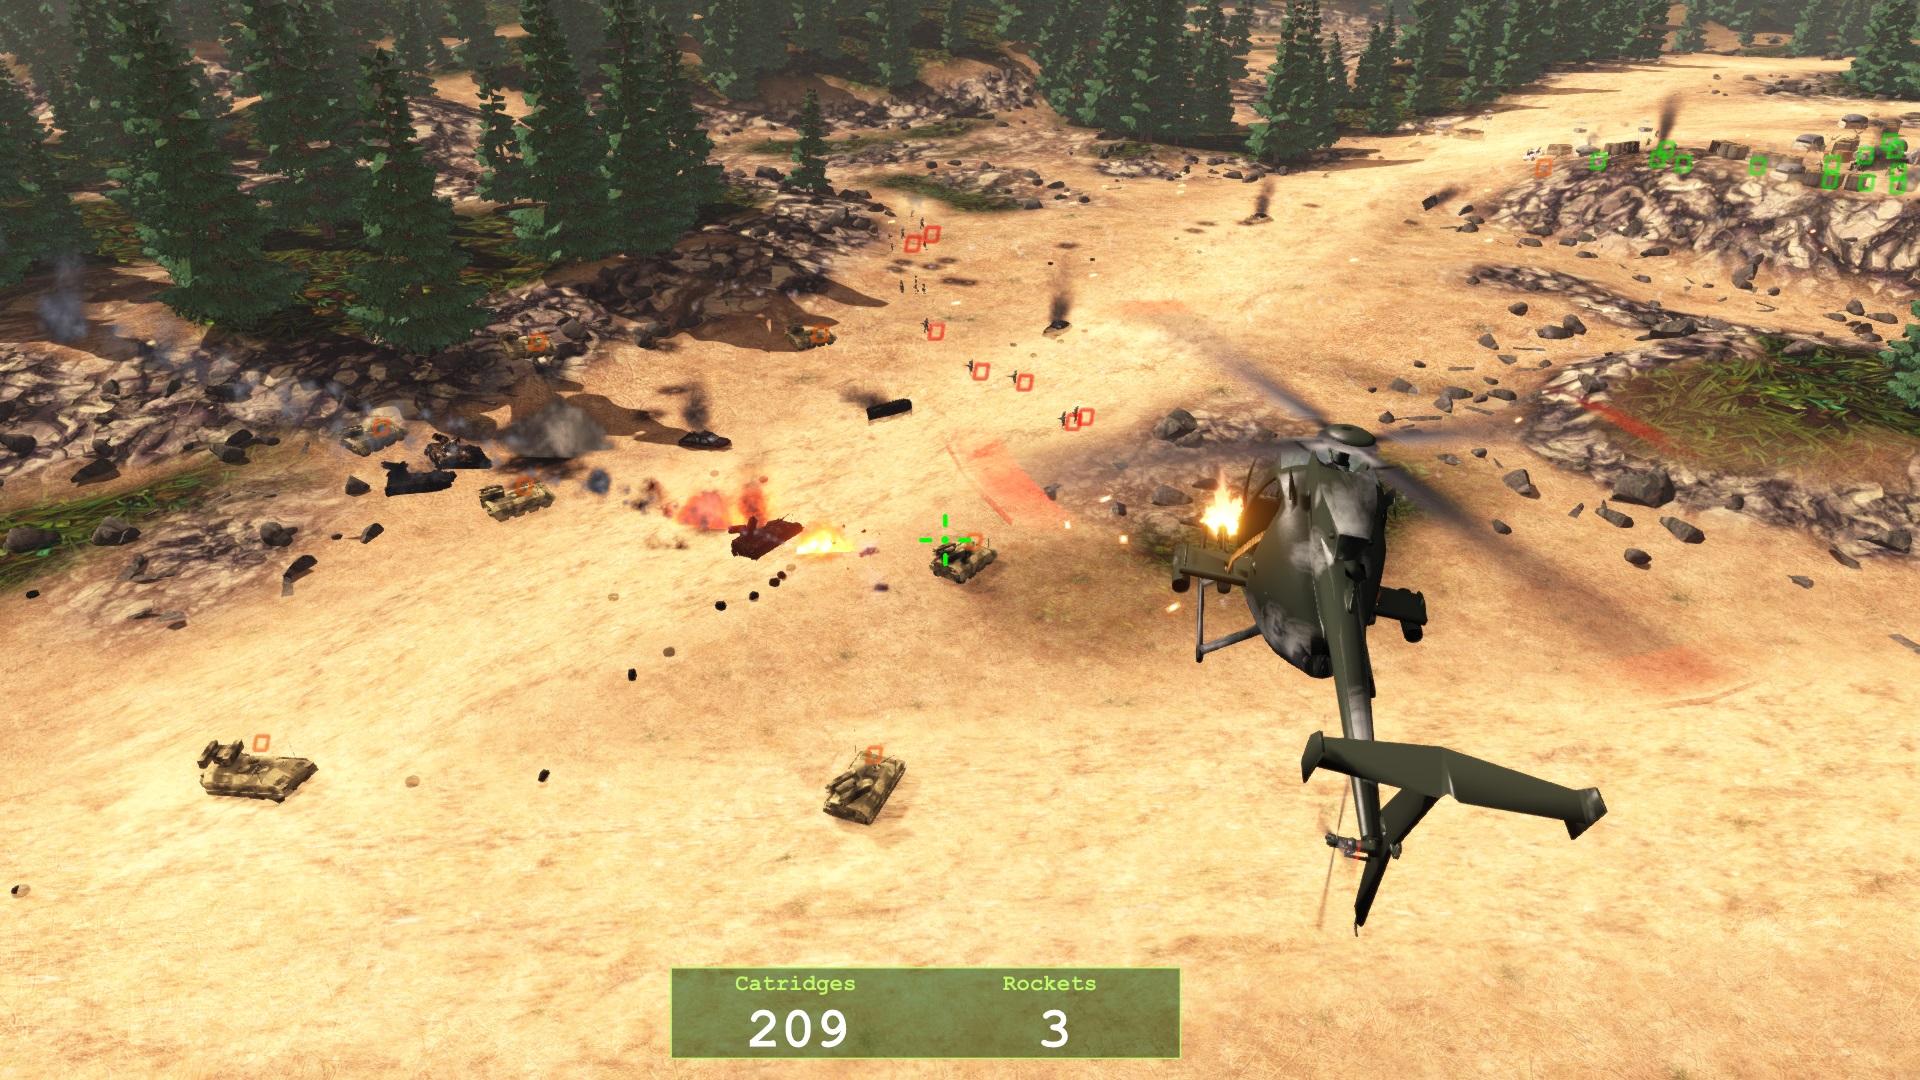 Screenshot №2 from game Aerial Destruction